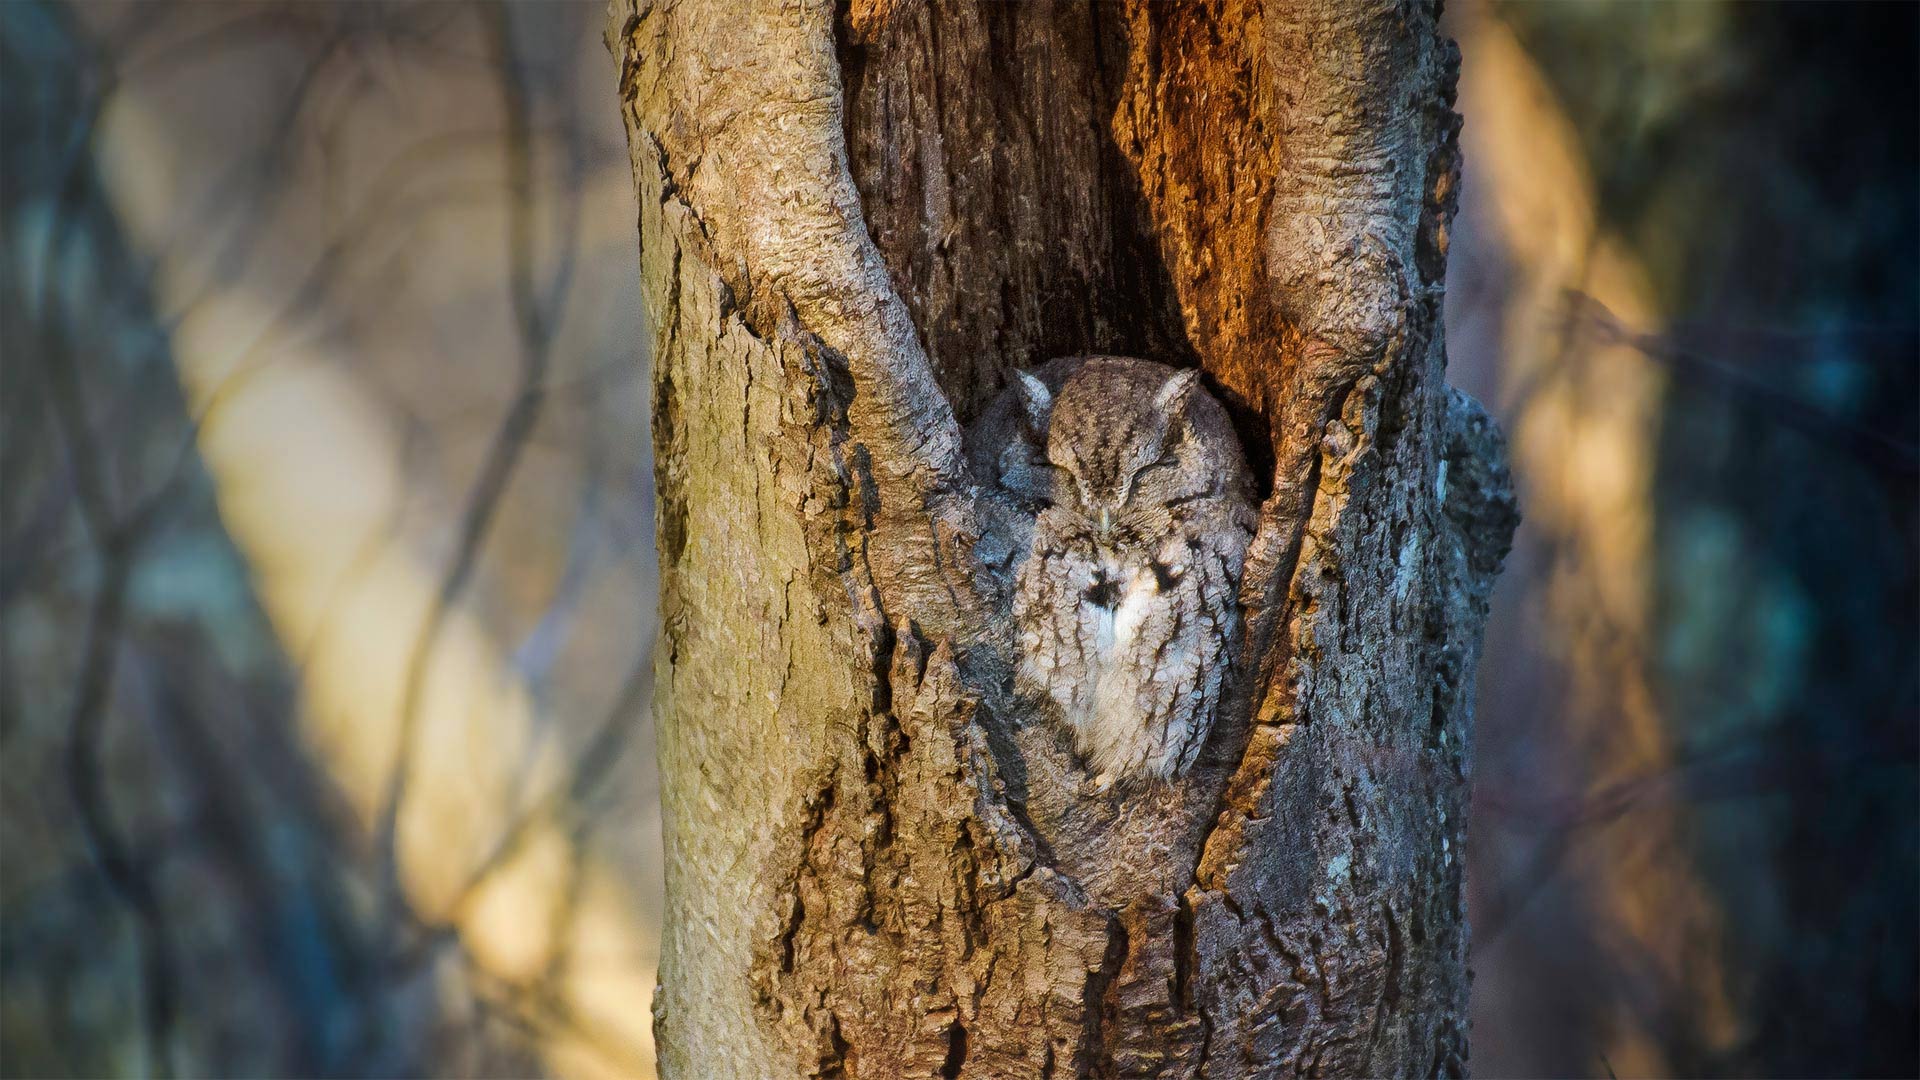 Screech owl resting in a tree cavity, Massapequa Preserve, Long Island, New York - Vicki Jauron, Babylon and Beyond Photography/Getty Images)